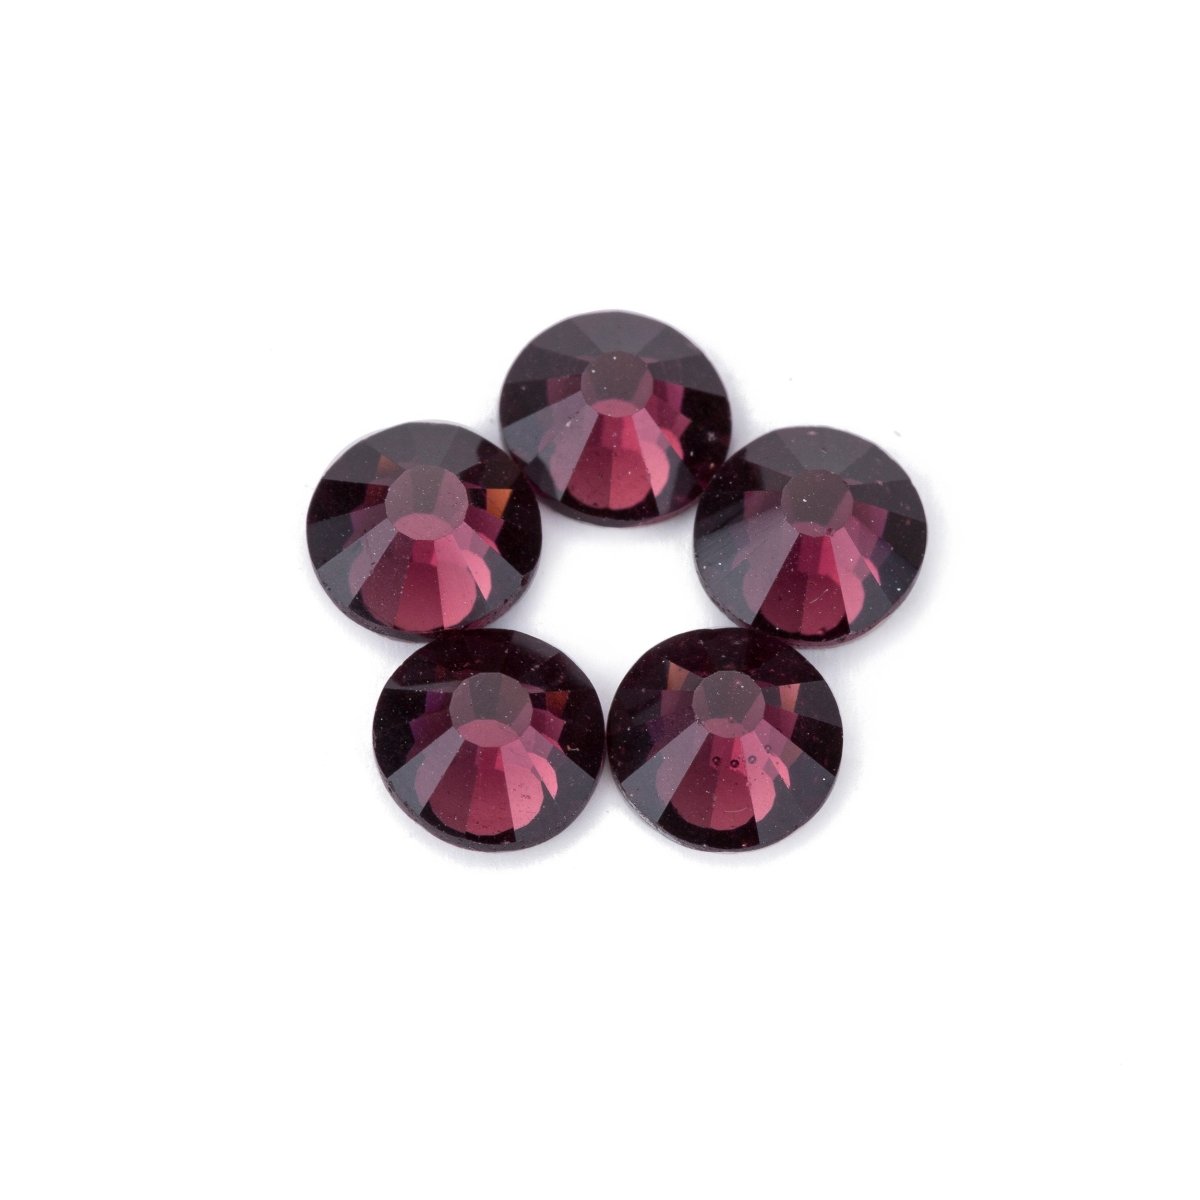 1440 pcs High Quality Crystal Dark Purple Amethyst Crystal Rhinestones Loose flatback No Hot Fix glass bead Size ss10 / ss12/ ss16 / ss20 - DLUXCA